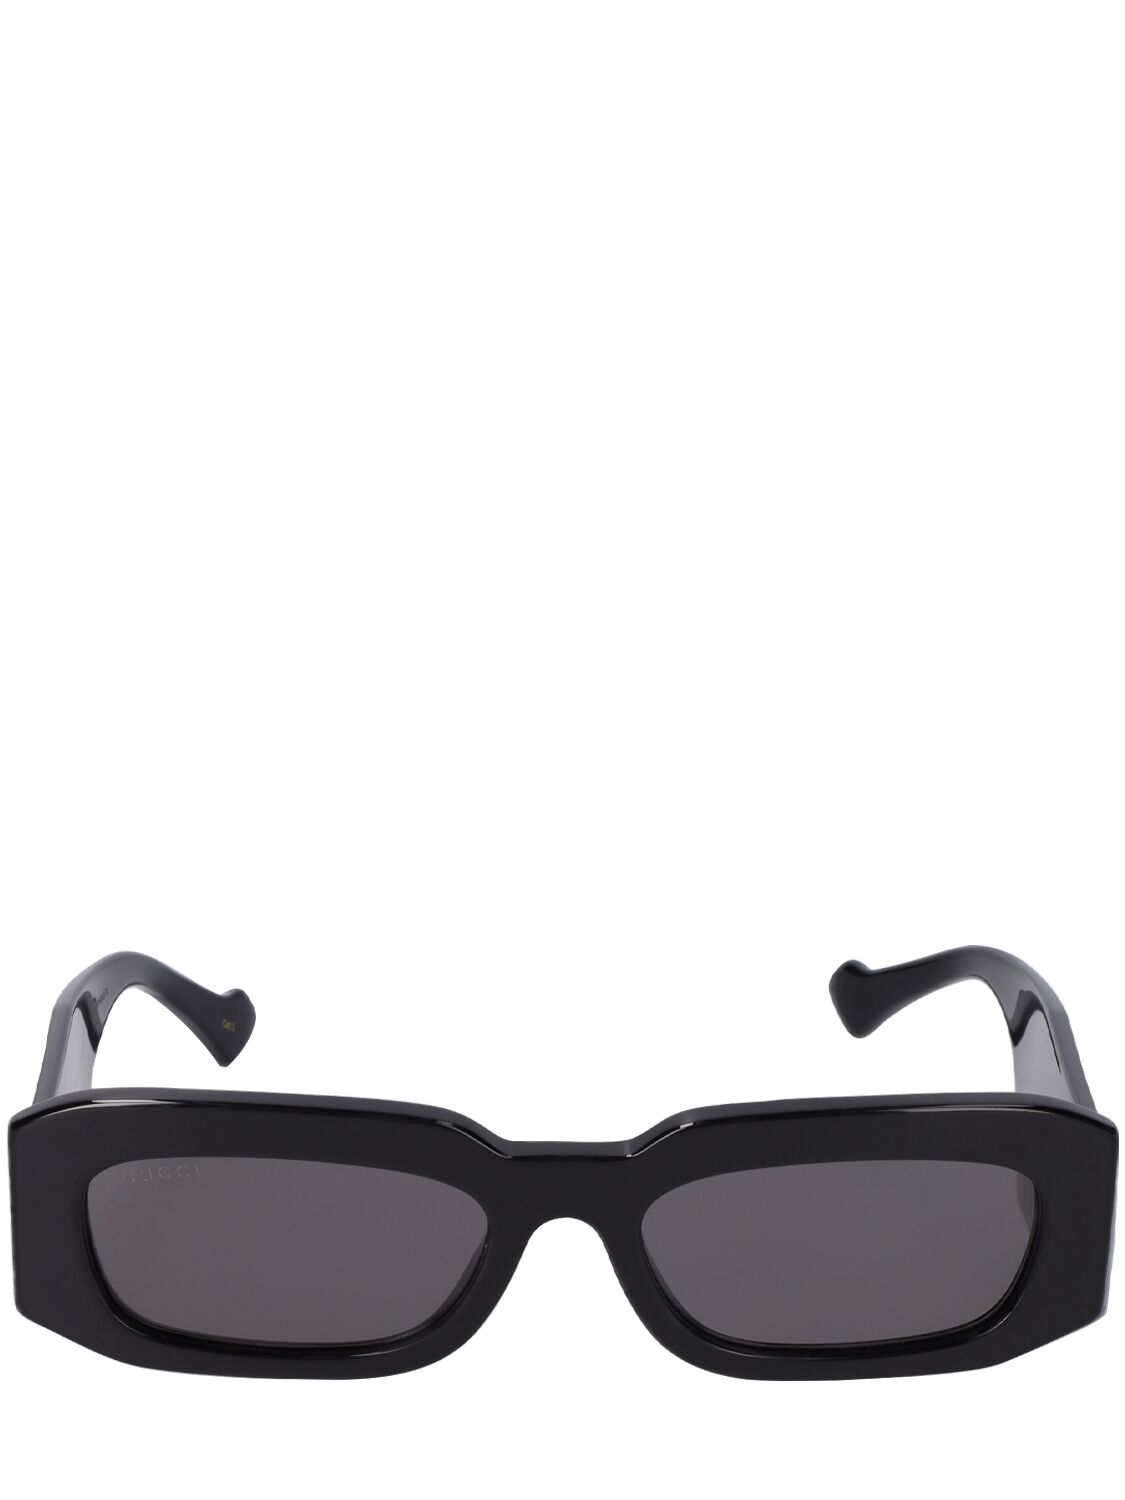 Image of Gg1426s Rectangular Acetate Sunglasses